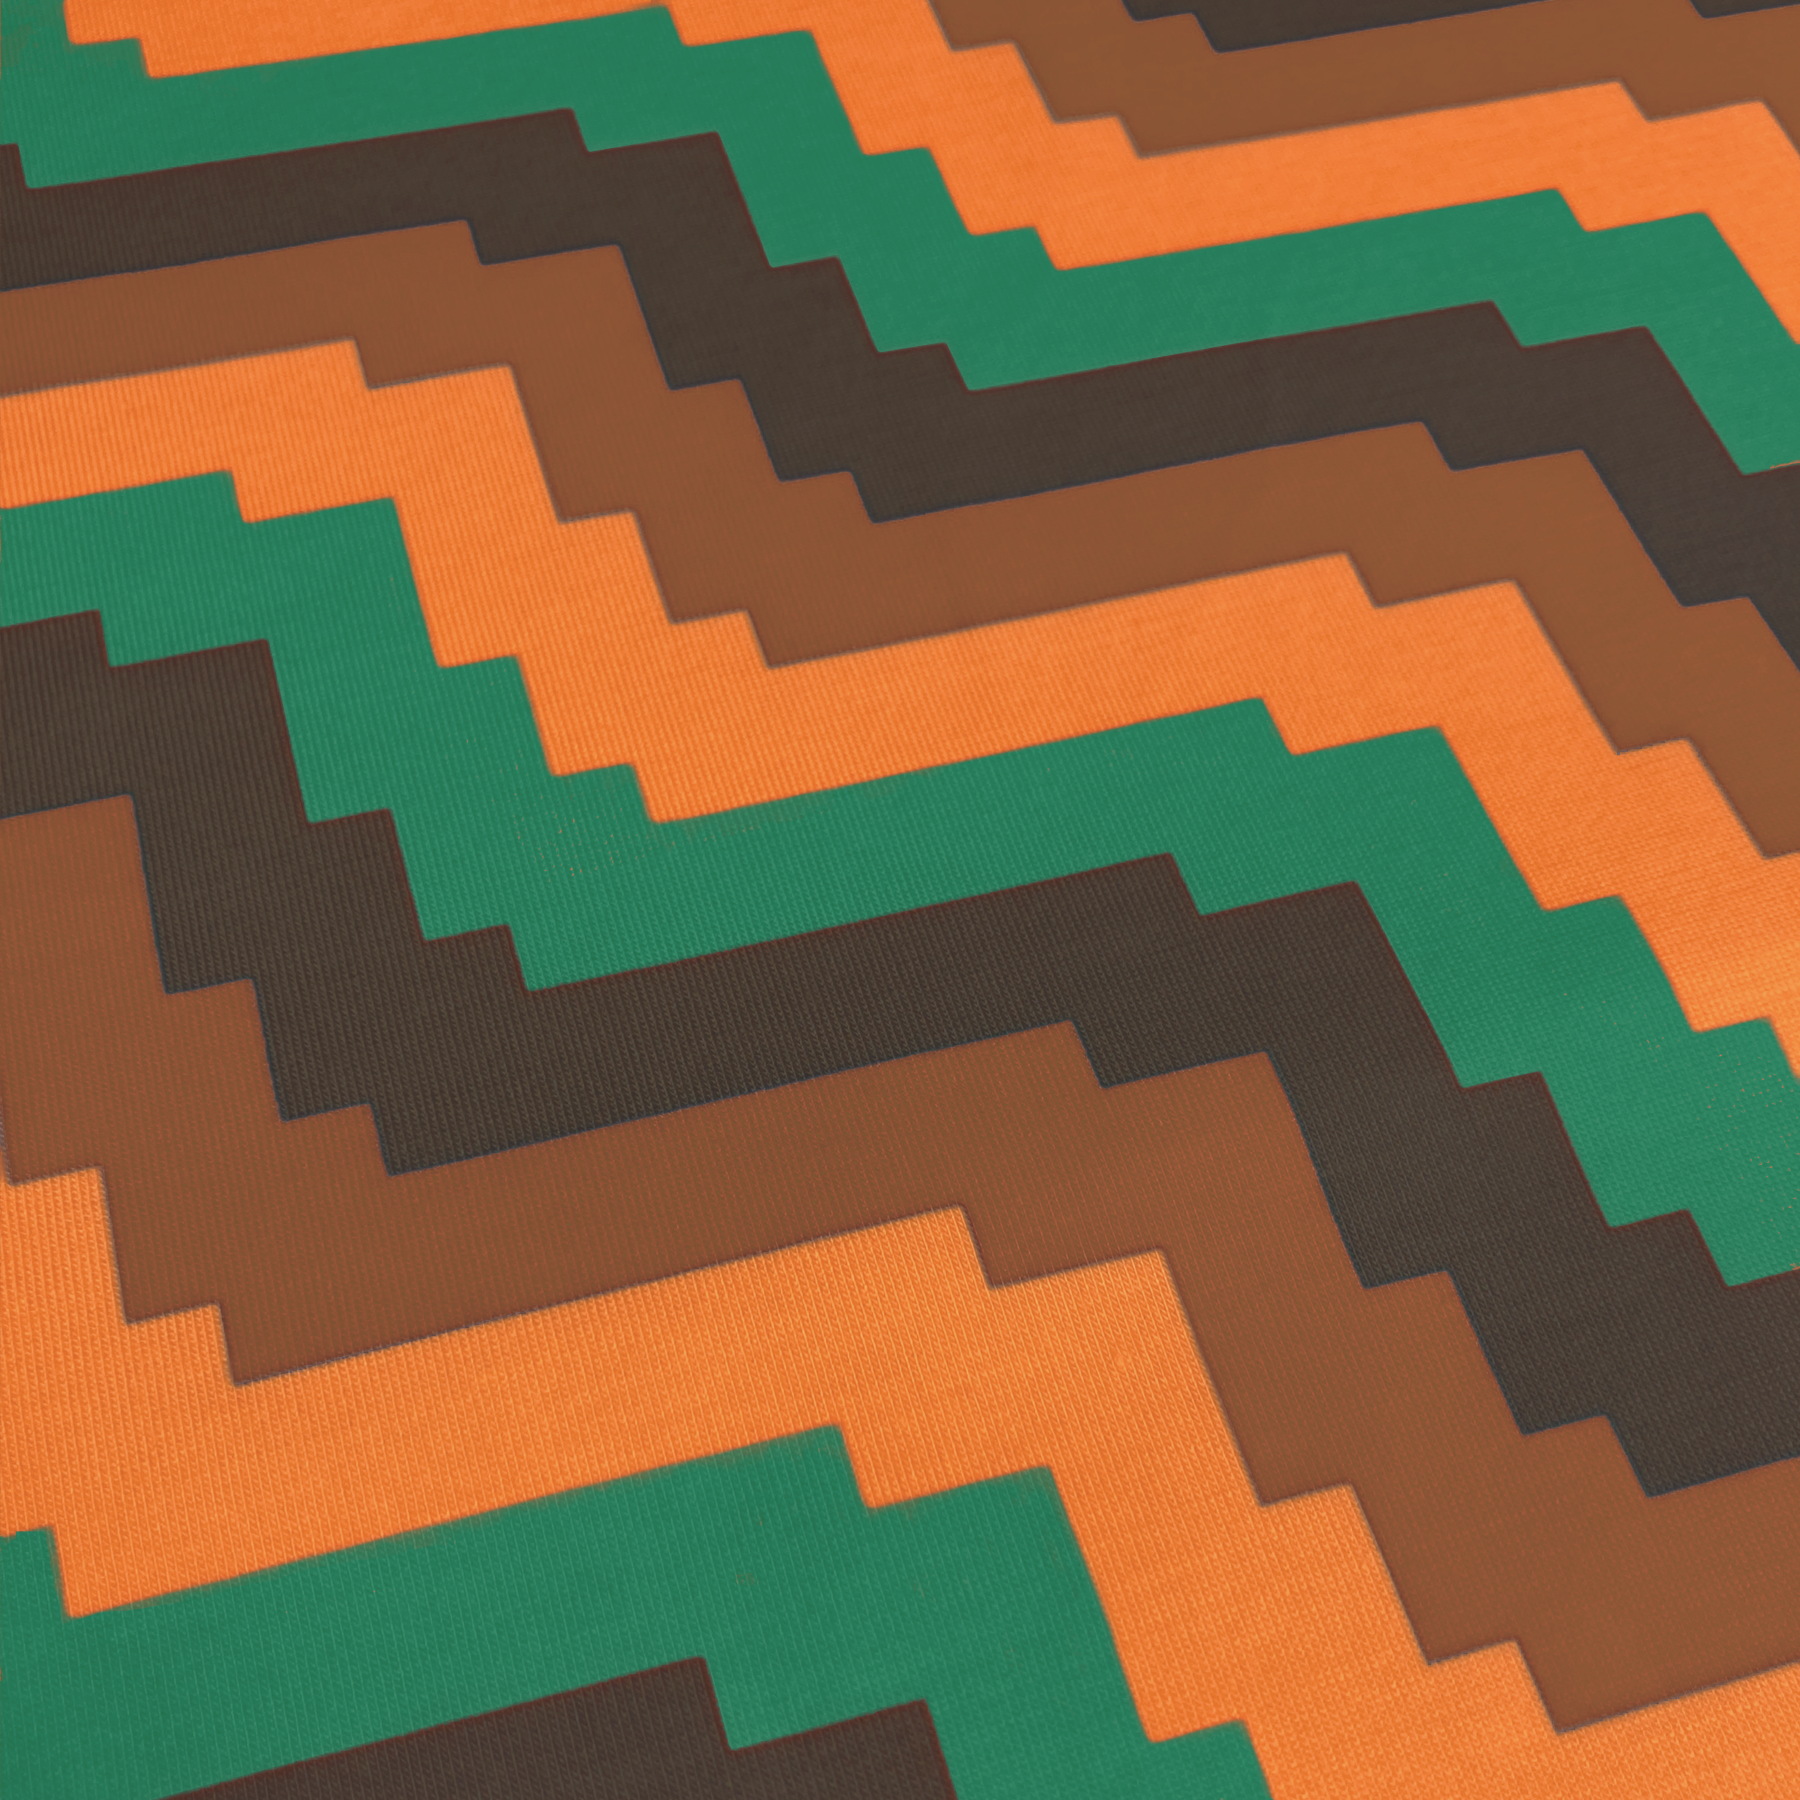 Wavy Pixel Stripe pattern in jewel and earth tones- emerald green orange tan, soil brown, and ash black brown